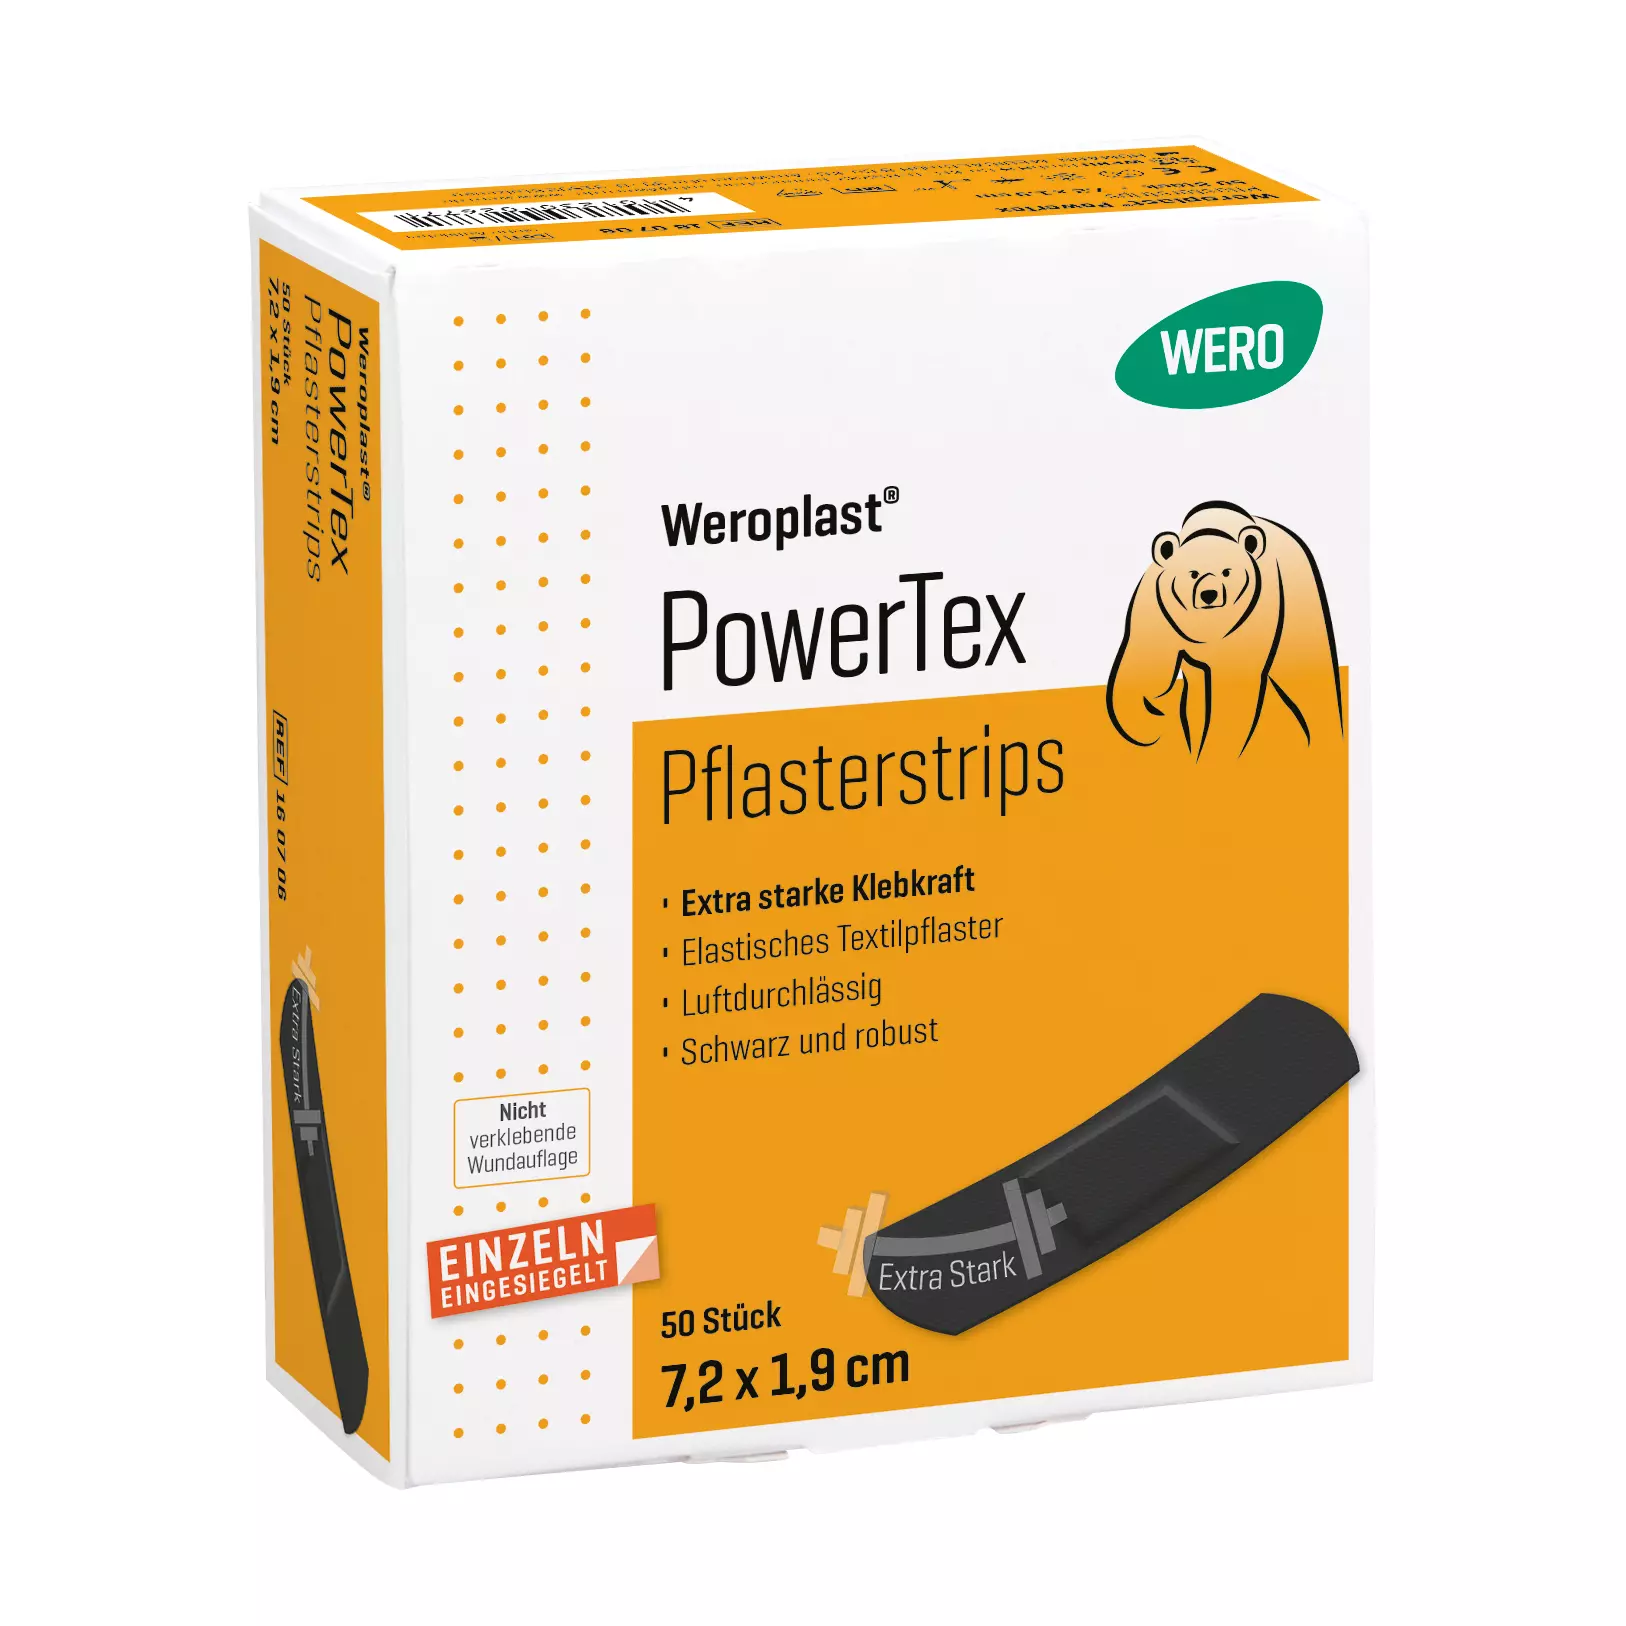 Pflasterstrips Weroplast® PowerTex - 1,9 cm, 7,2 cm